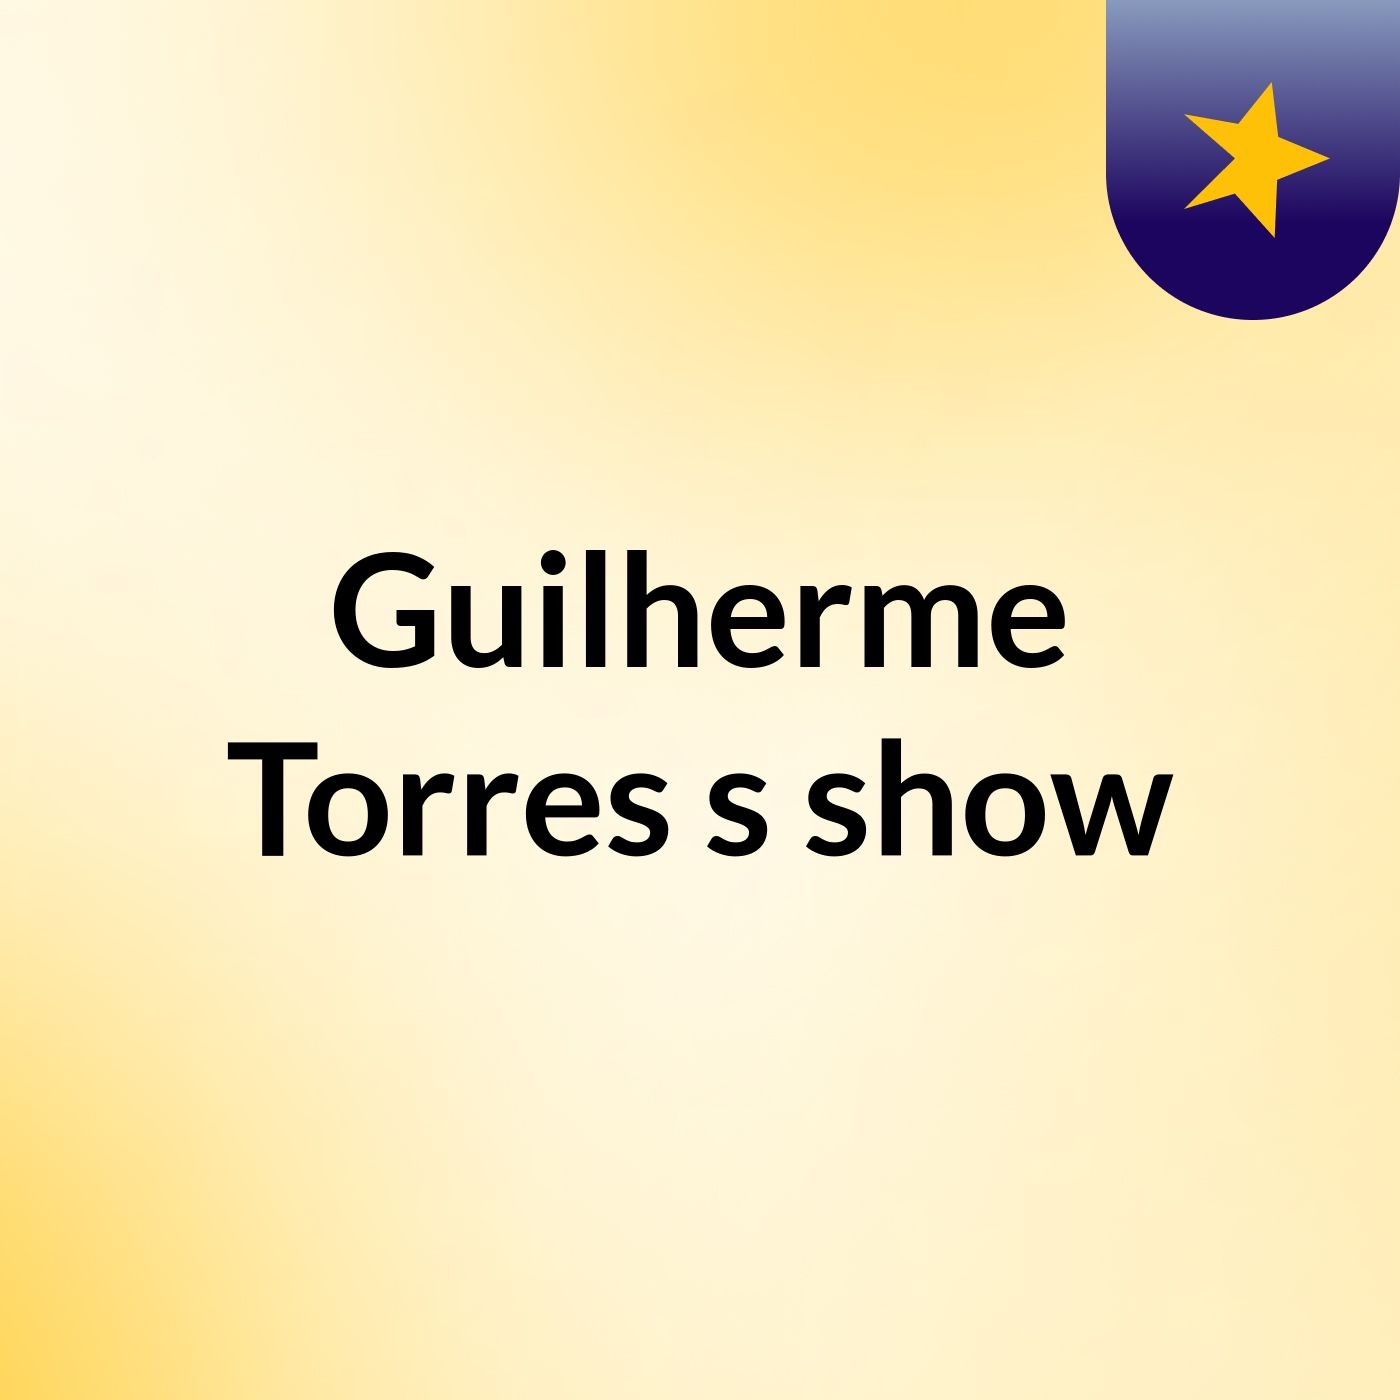 Guilherme Torres's show